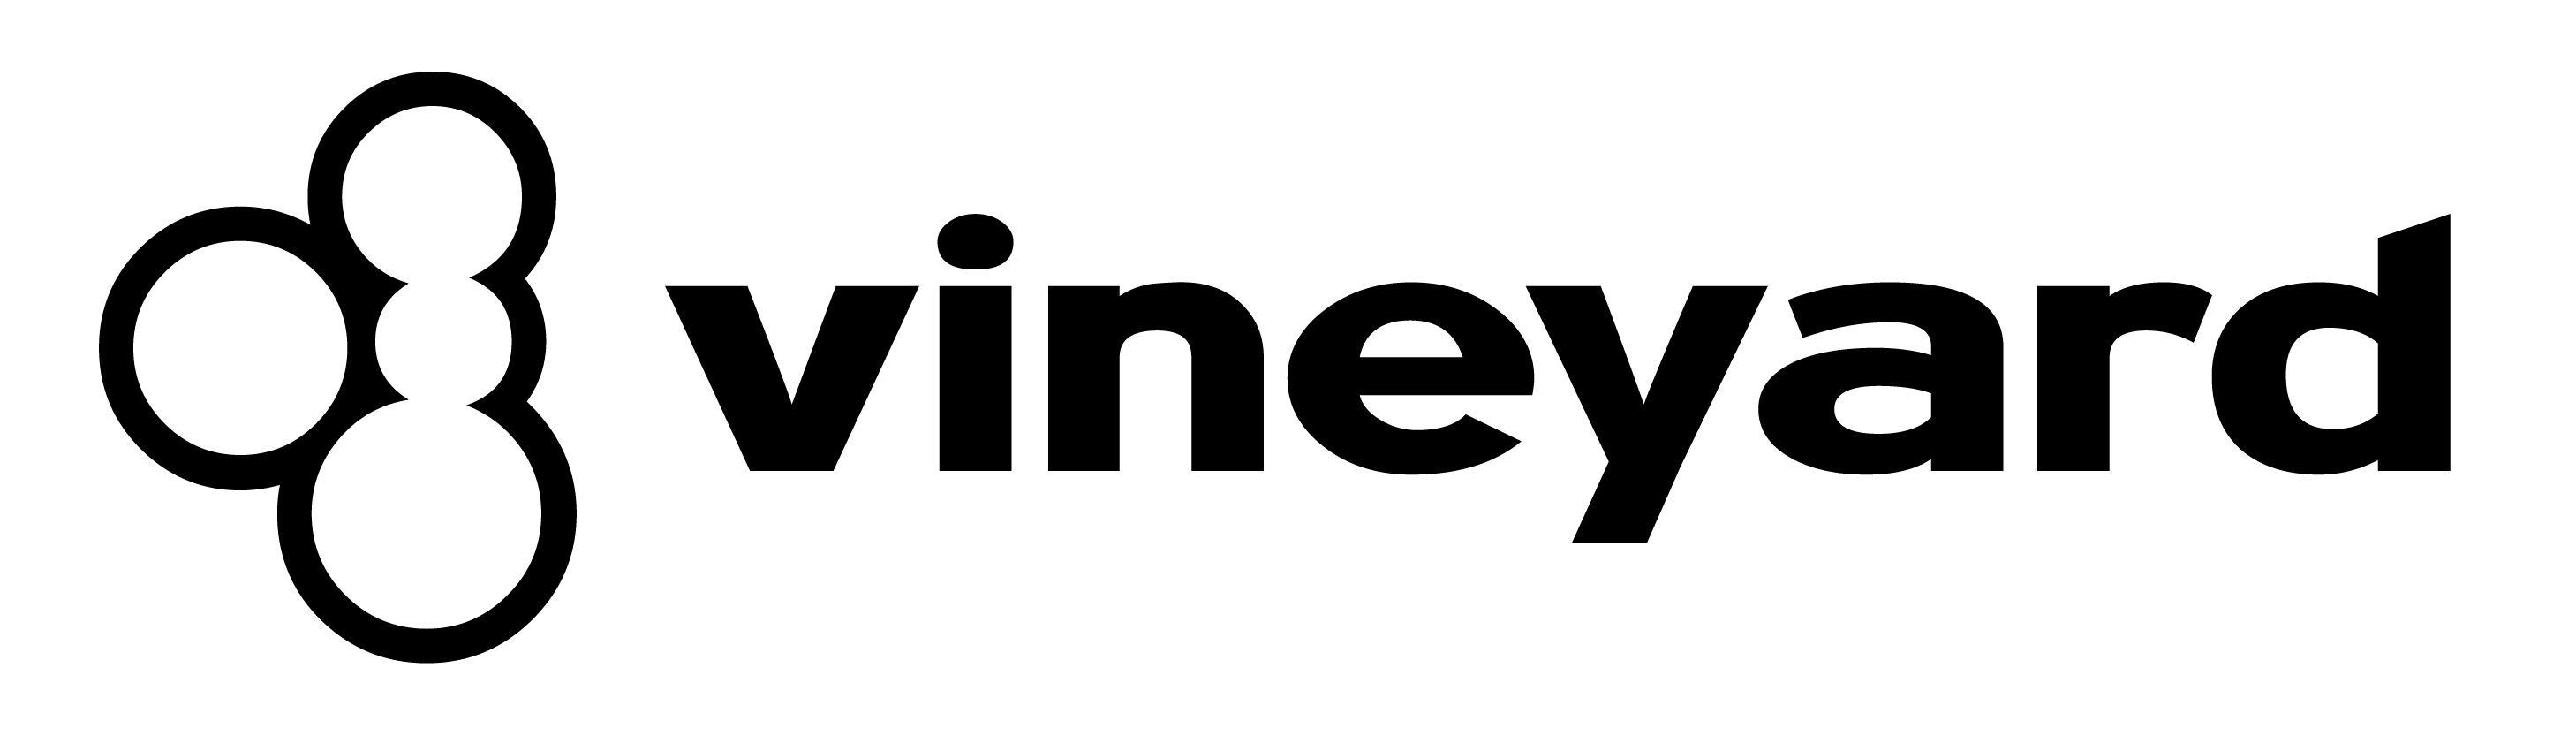 Vineyard Logo - Logo | trademark and license agreement